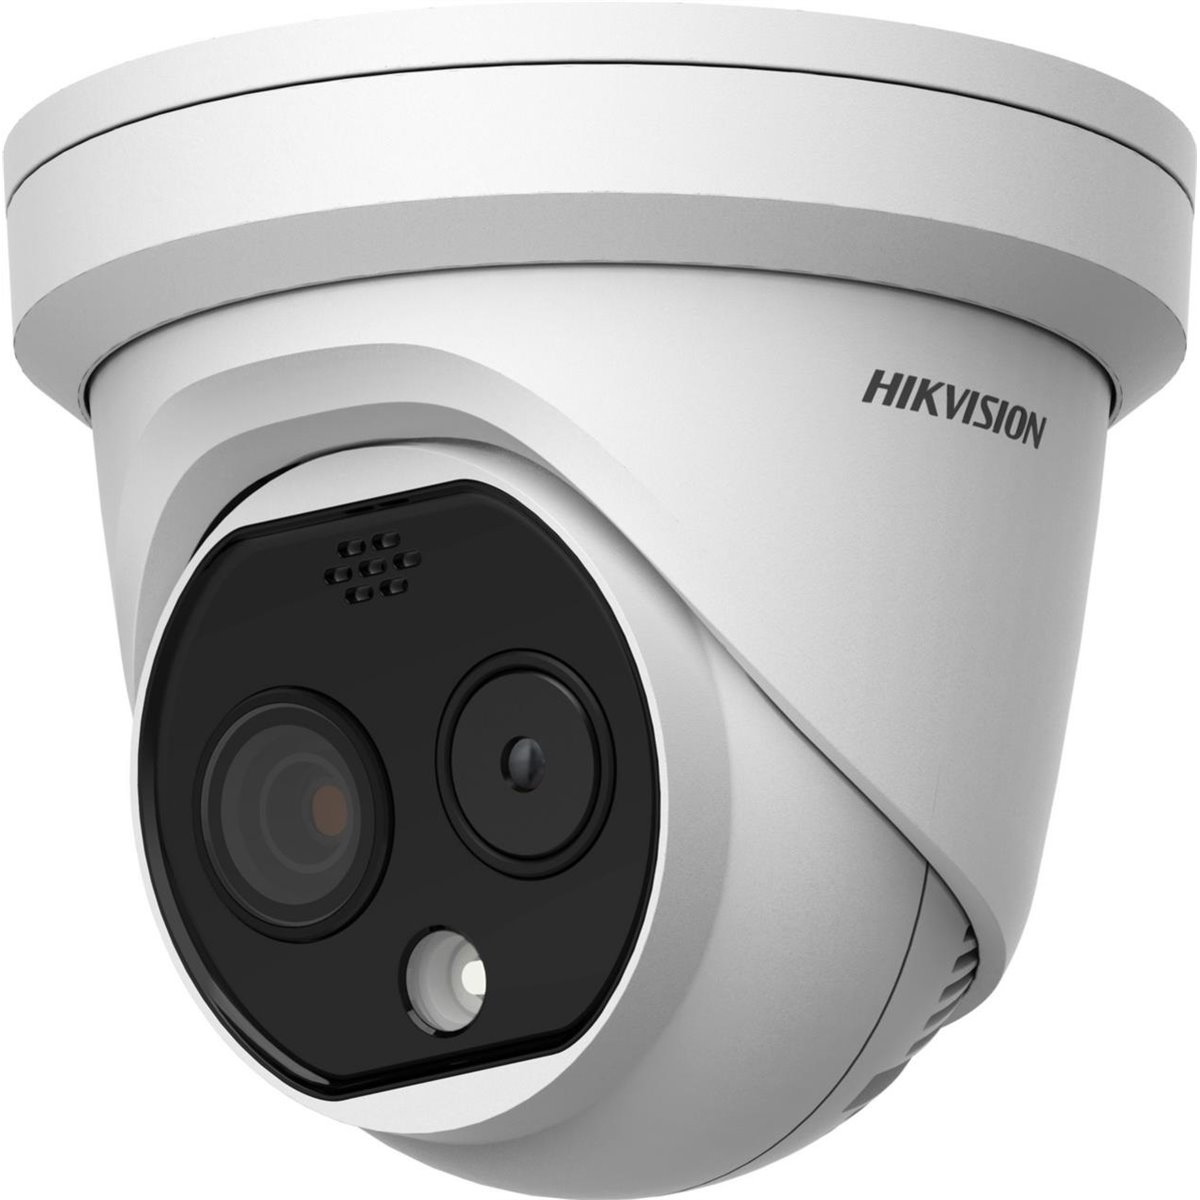 Hikvision Netzwerk Dome Kamera Dual Tag-Nacht 2mm 2688x1520 Wärmebild 1.8mm 160x120